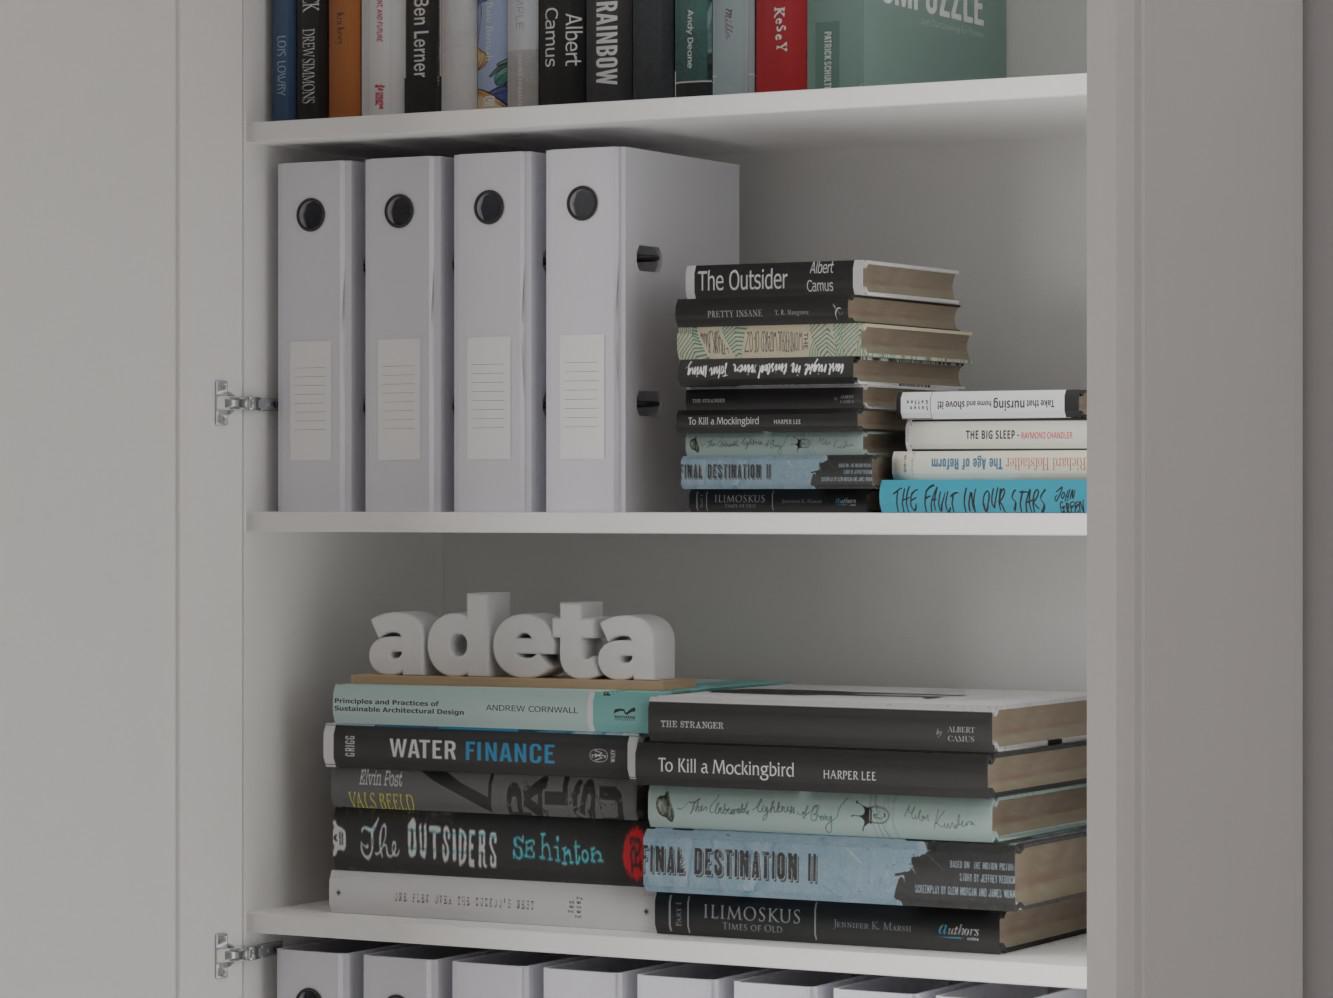  Книжный шкаф Билли 414 white ИКЕА (IKEA) изображение товара